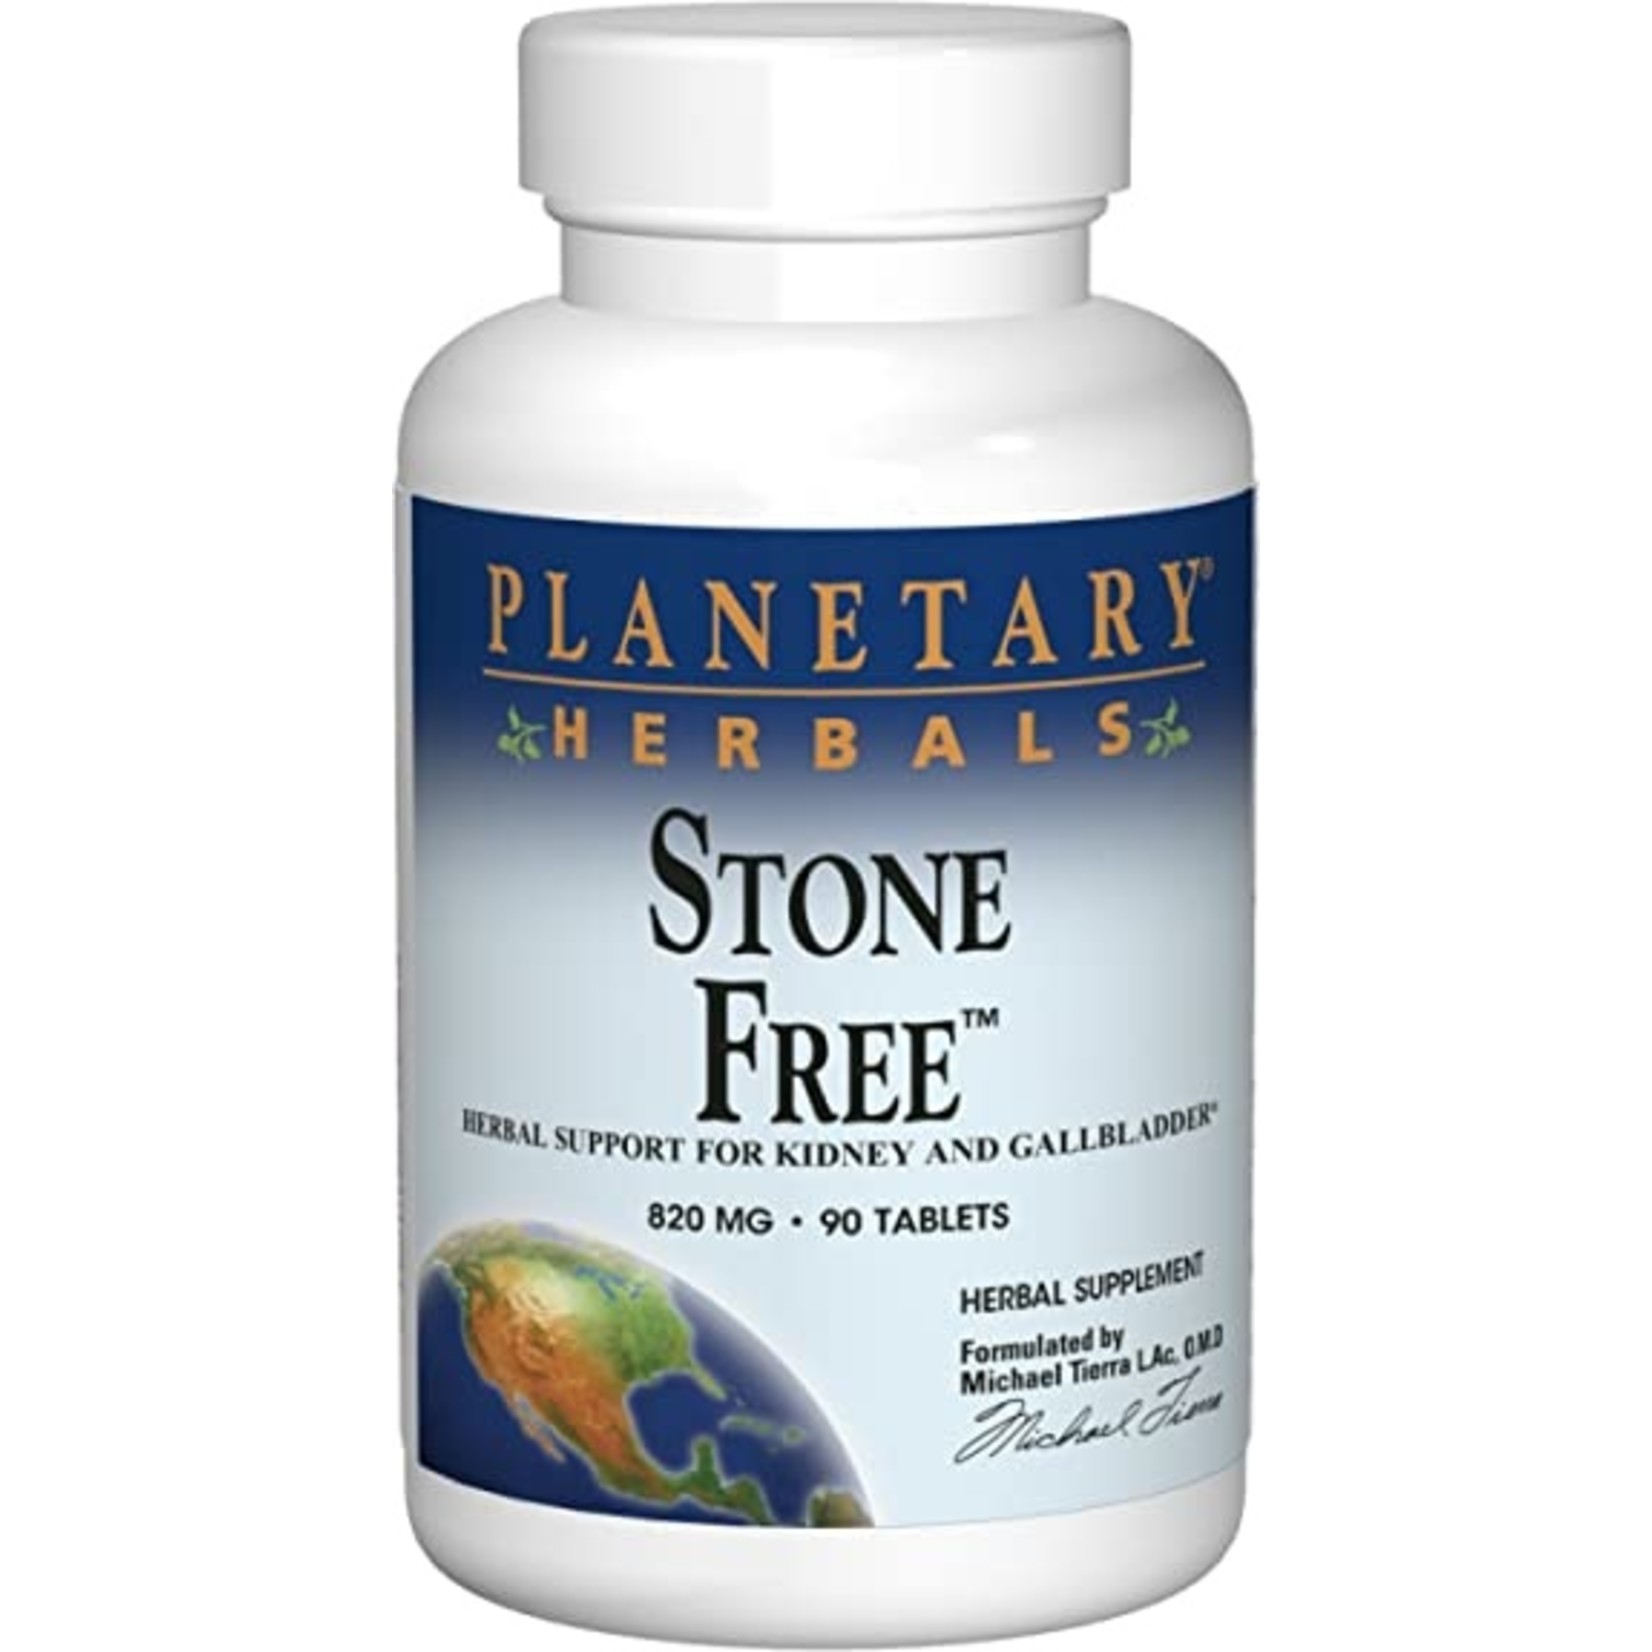 Planetary Herbals Planetary Herbals - Stone Free 820mg - 90 Tablets